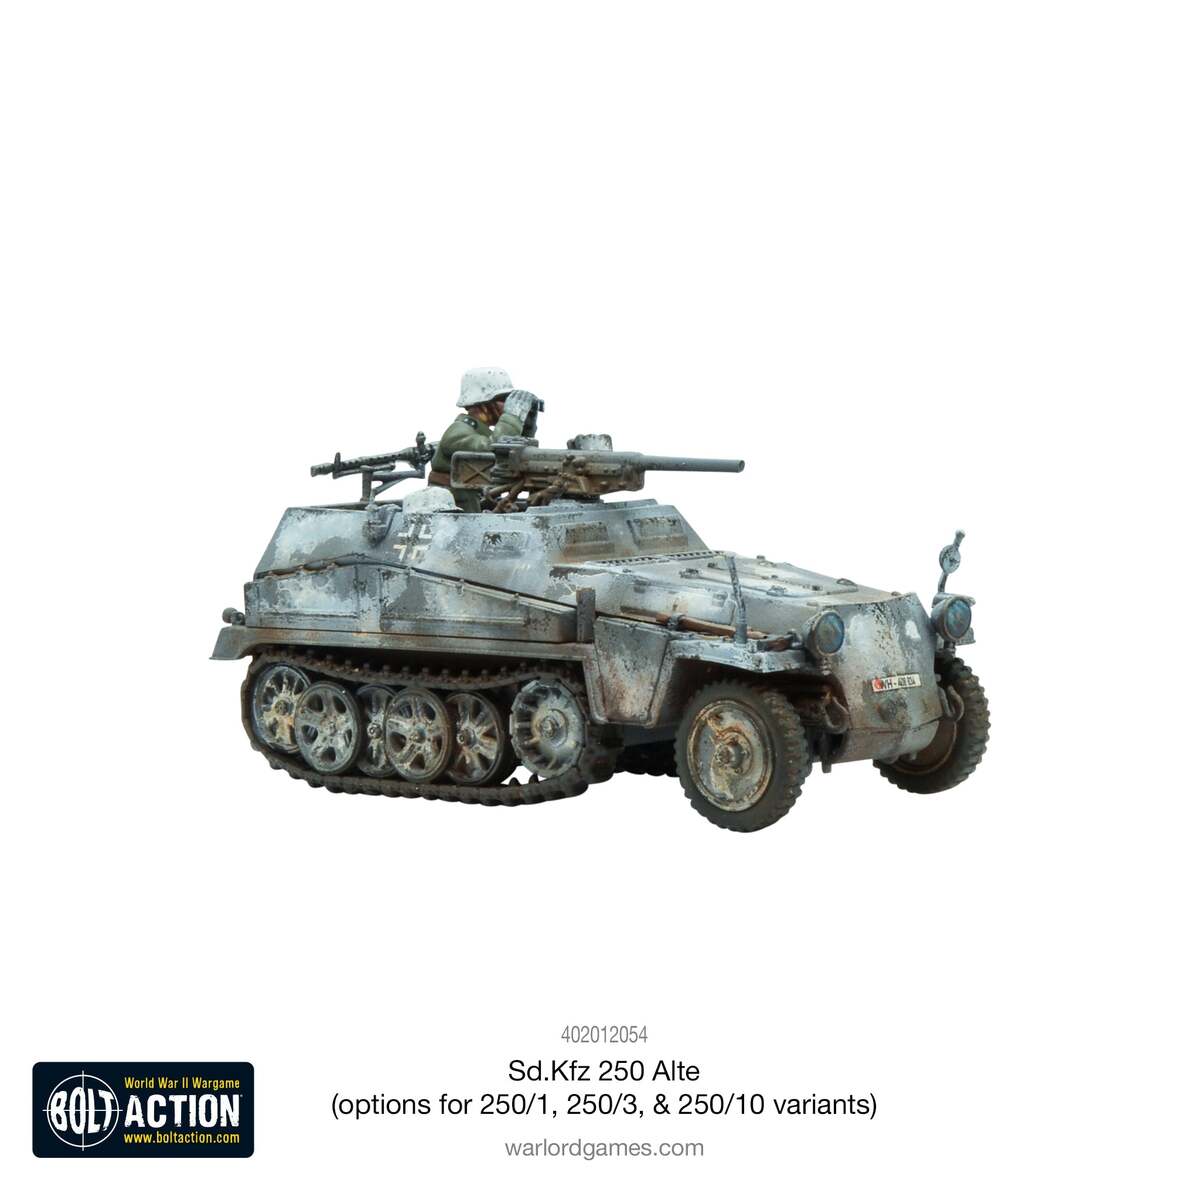 Warlord Games 402012054 Sd.Kfz 250 (Alte) Half-Track Plastic Model Kit